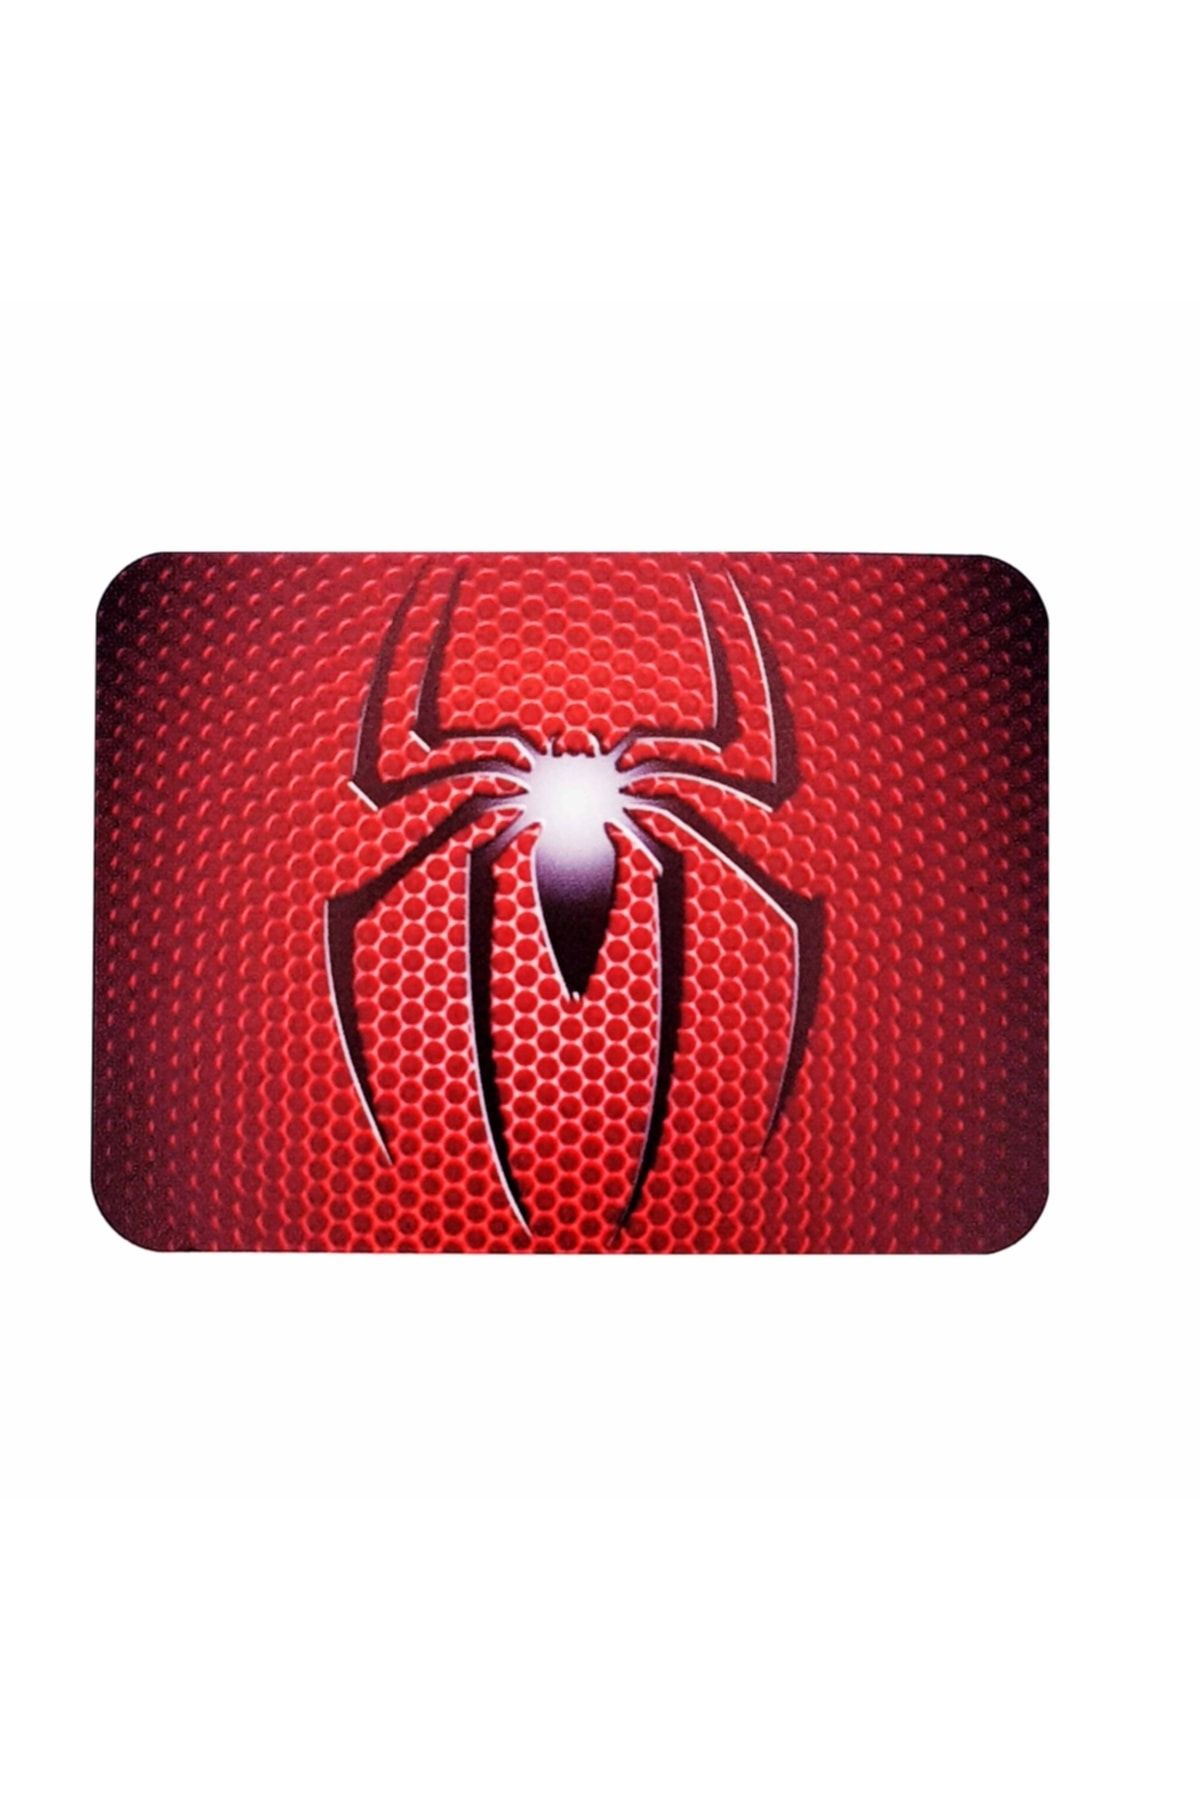 POPKONSOL Playstation 4 Touchpad Koruyucu Yapıştırma Spiderman Touchpad Sticker Ps4 Aksesuar Model 06